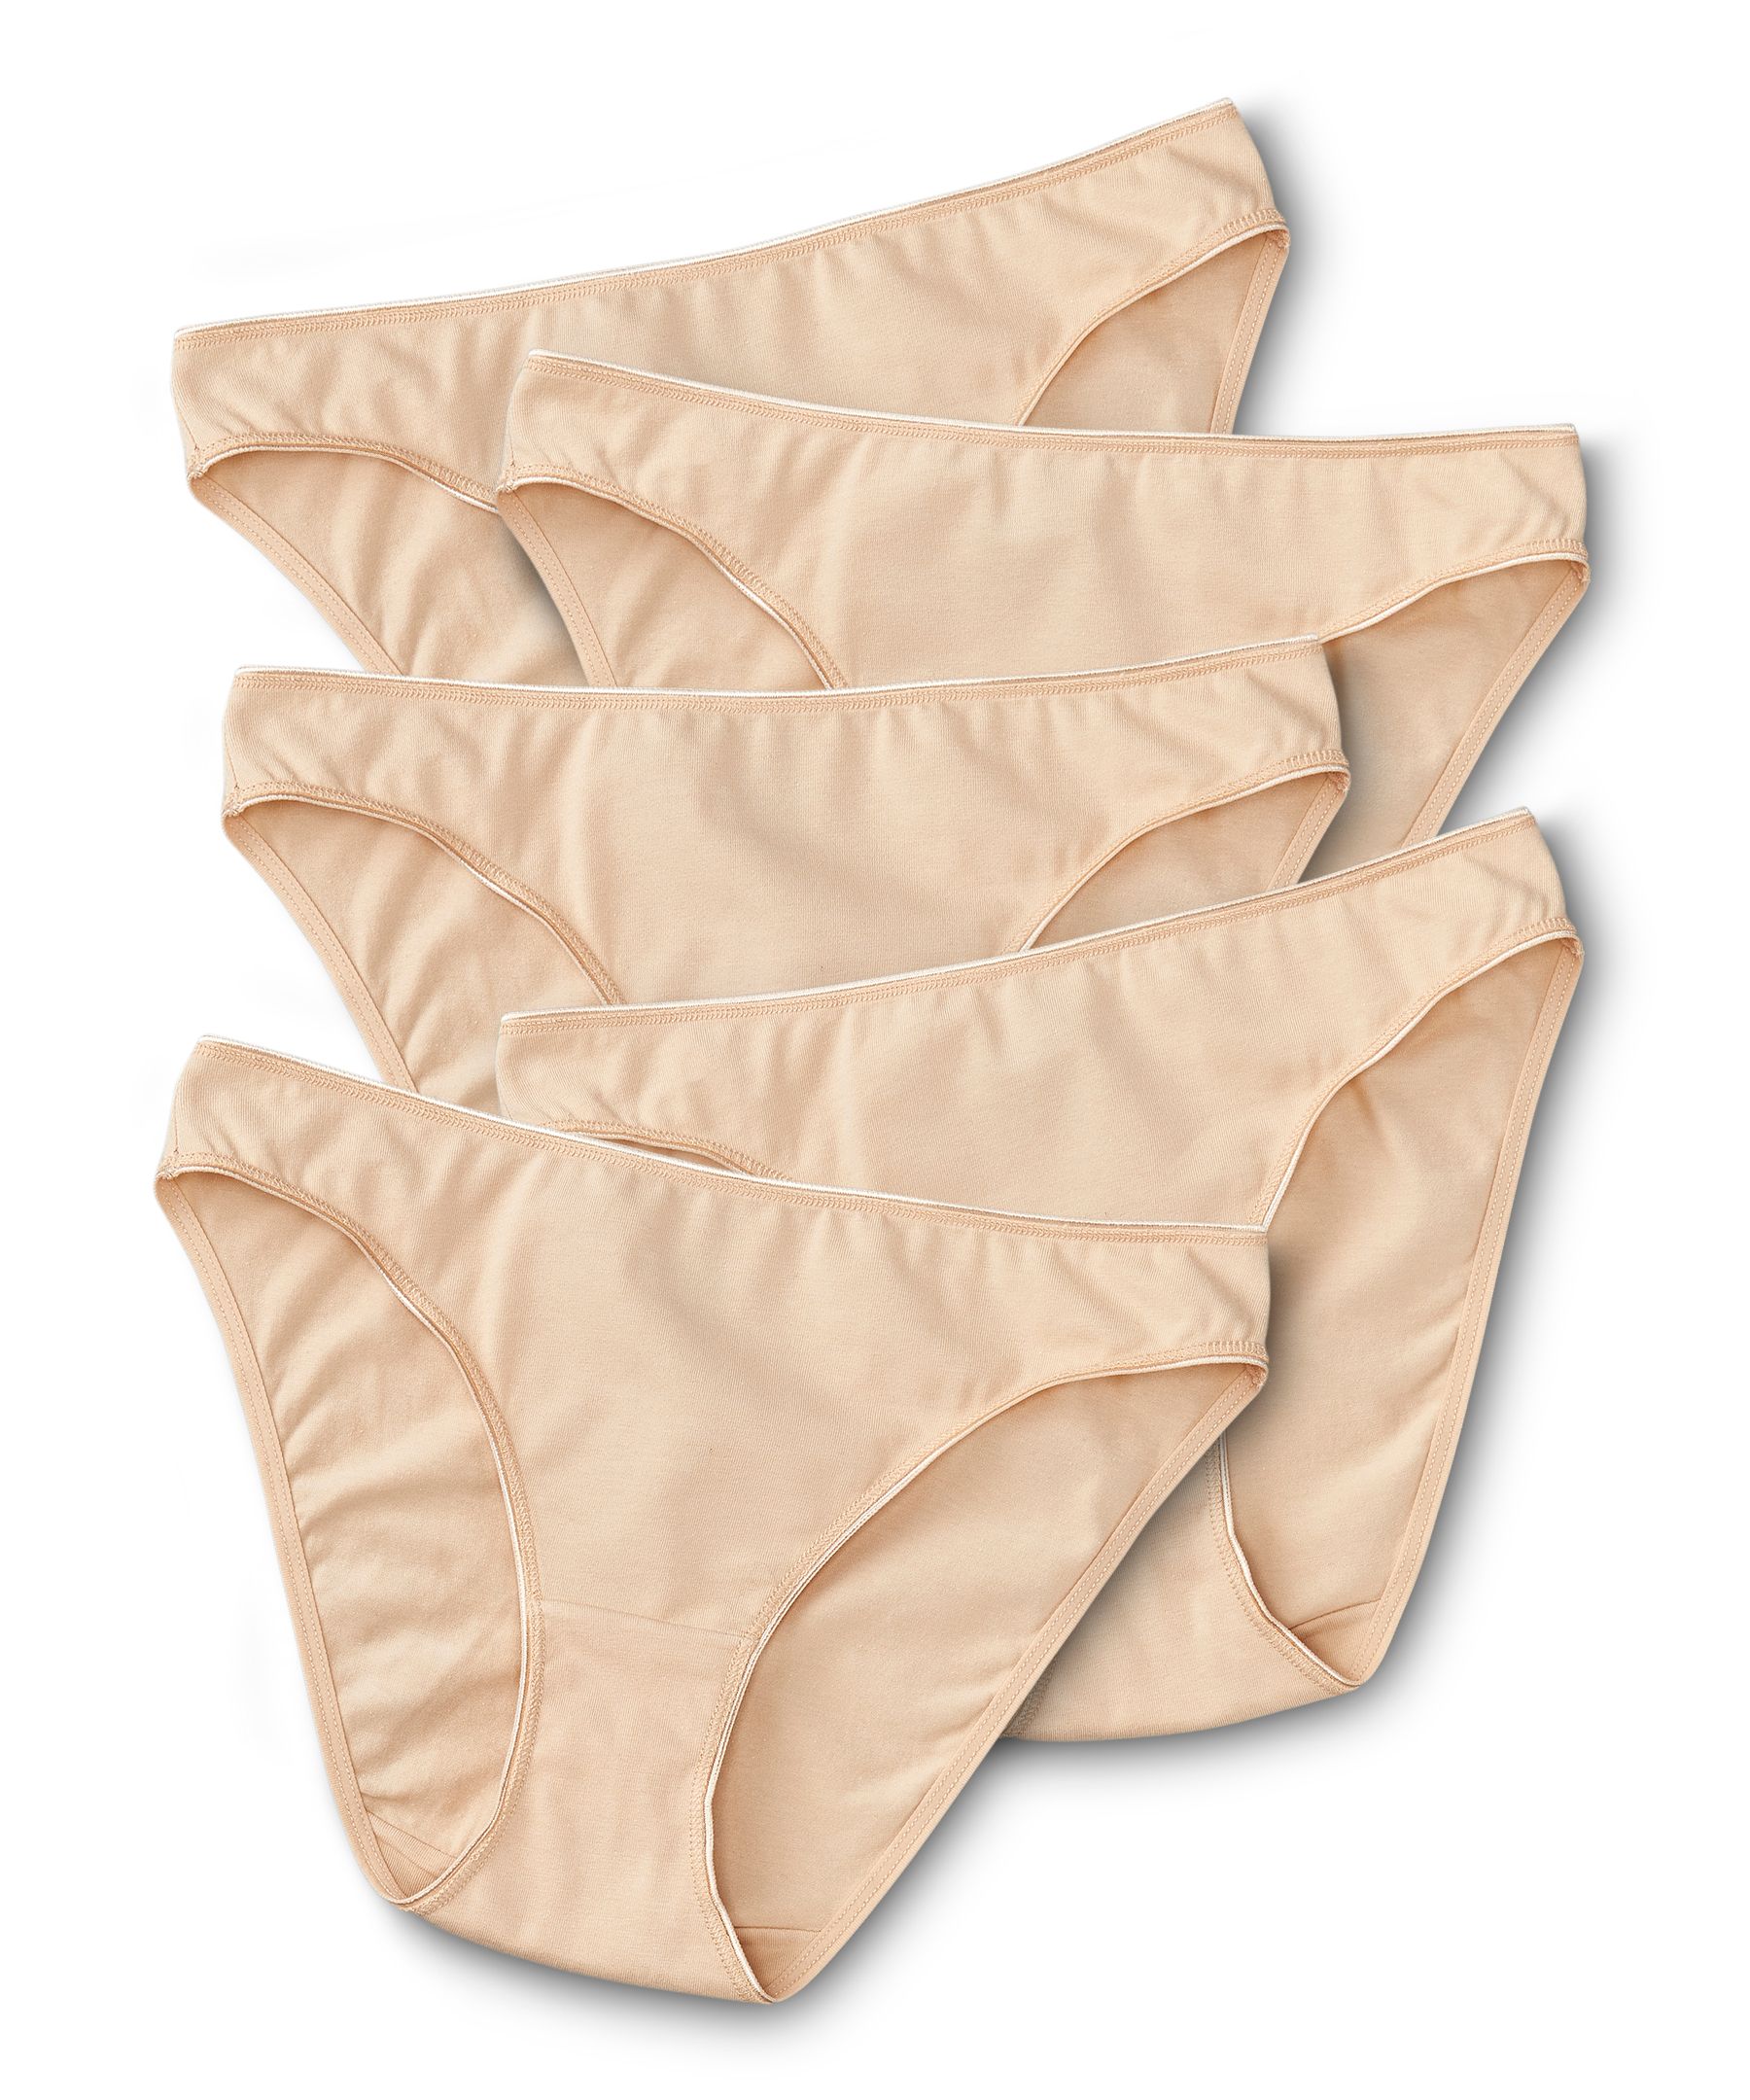 Denver Hayes Women's 5 Pack Cotton Stretch Bikini Panty